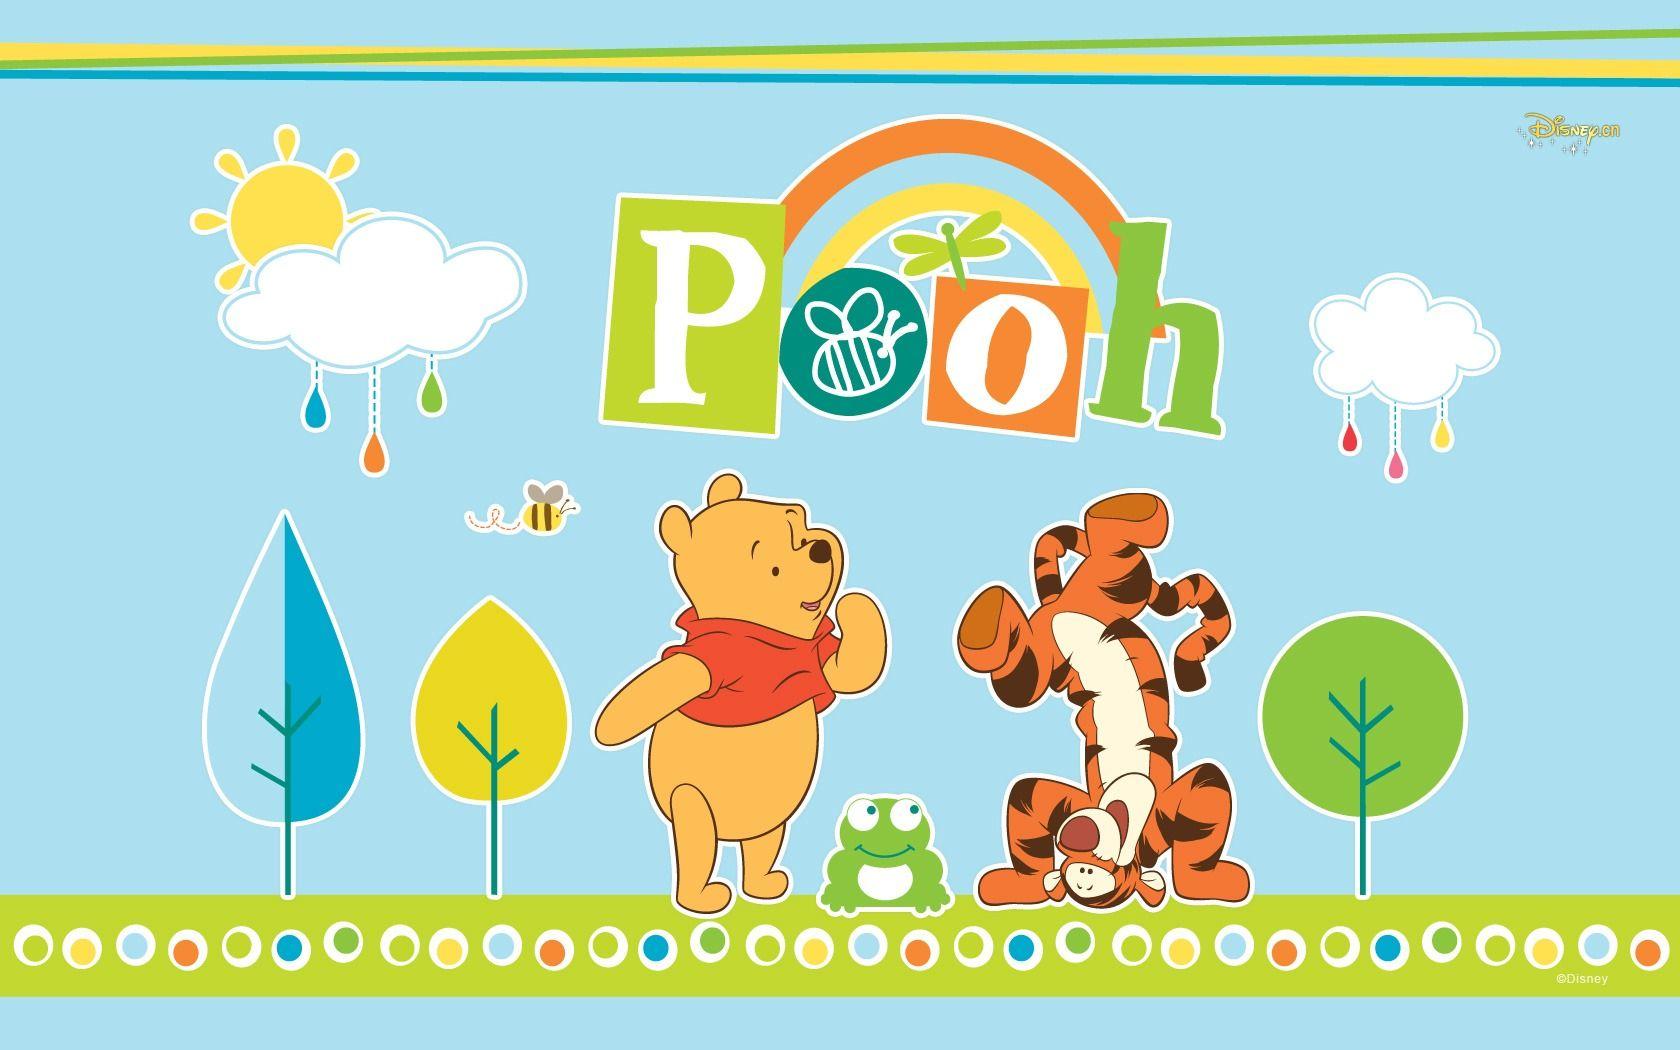 Winnie The Pooh Wallpaper Fullscreen Cute Wallpaper